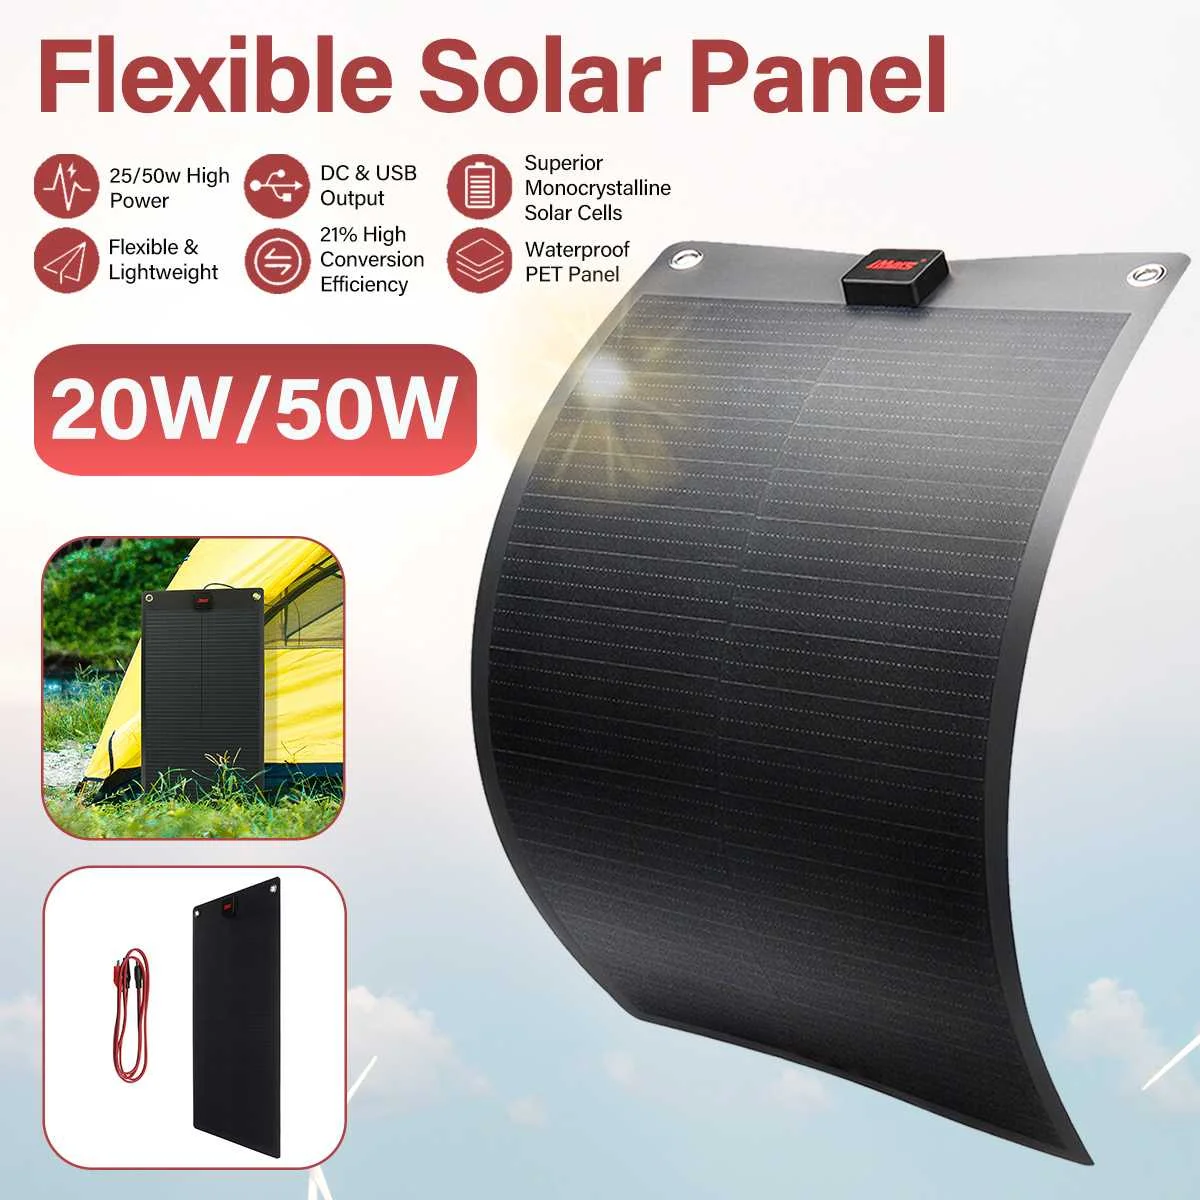 Imars 25w/50w 19v pet painel solar flexÃ­vel pilha carregador de bateria dc & usb saÃ­da portÃ¡til painel solar kit completo para exterior